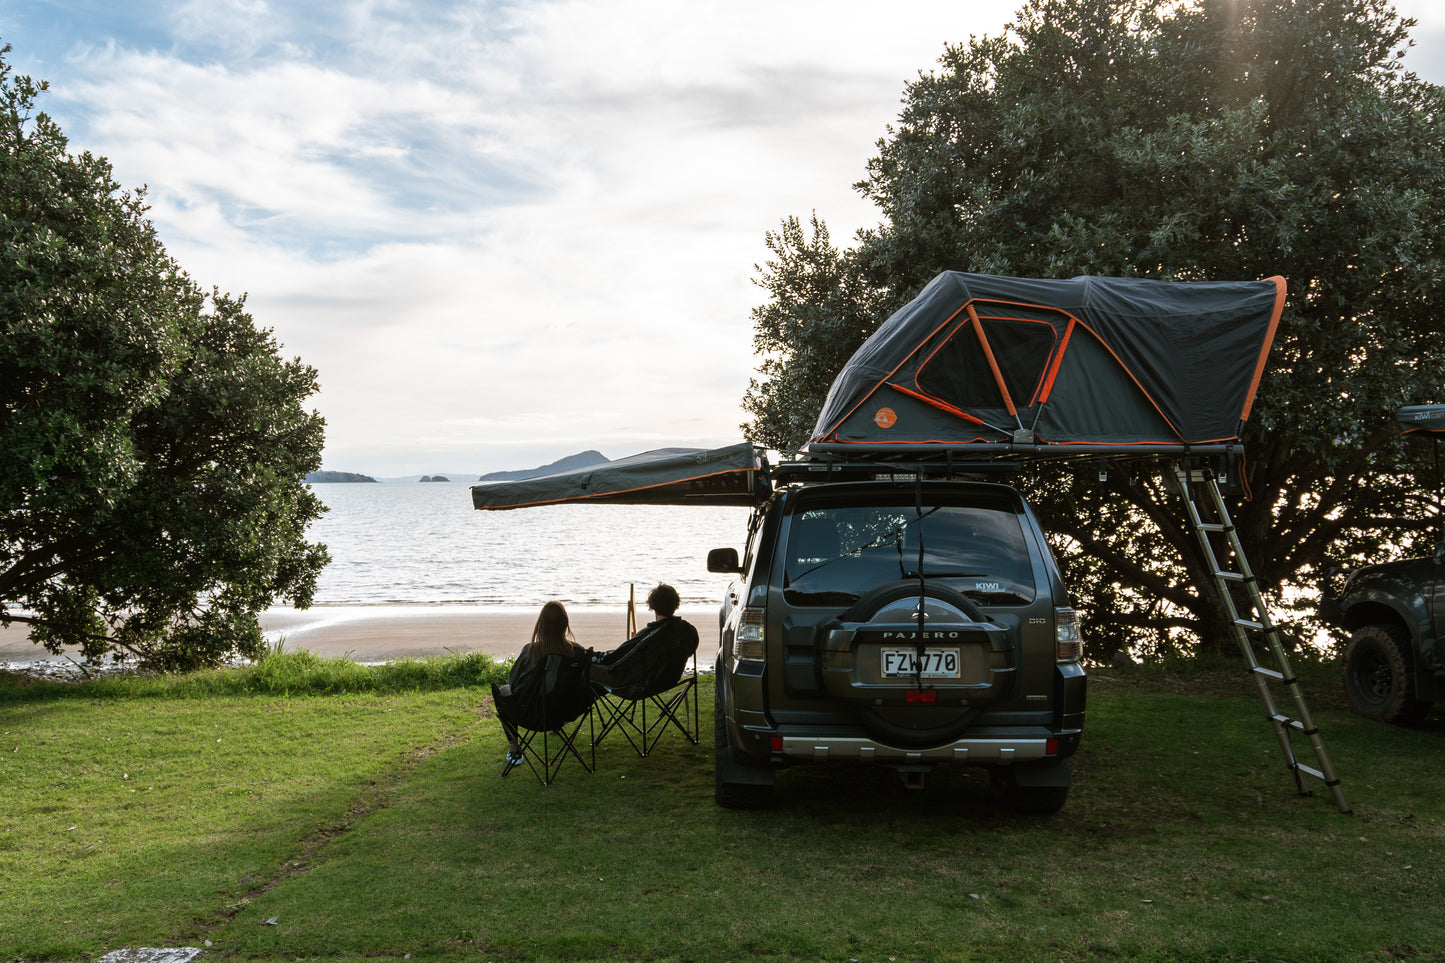 Kiwi Camping Tuatara 180-Degree Self-Supporting Awning